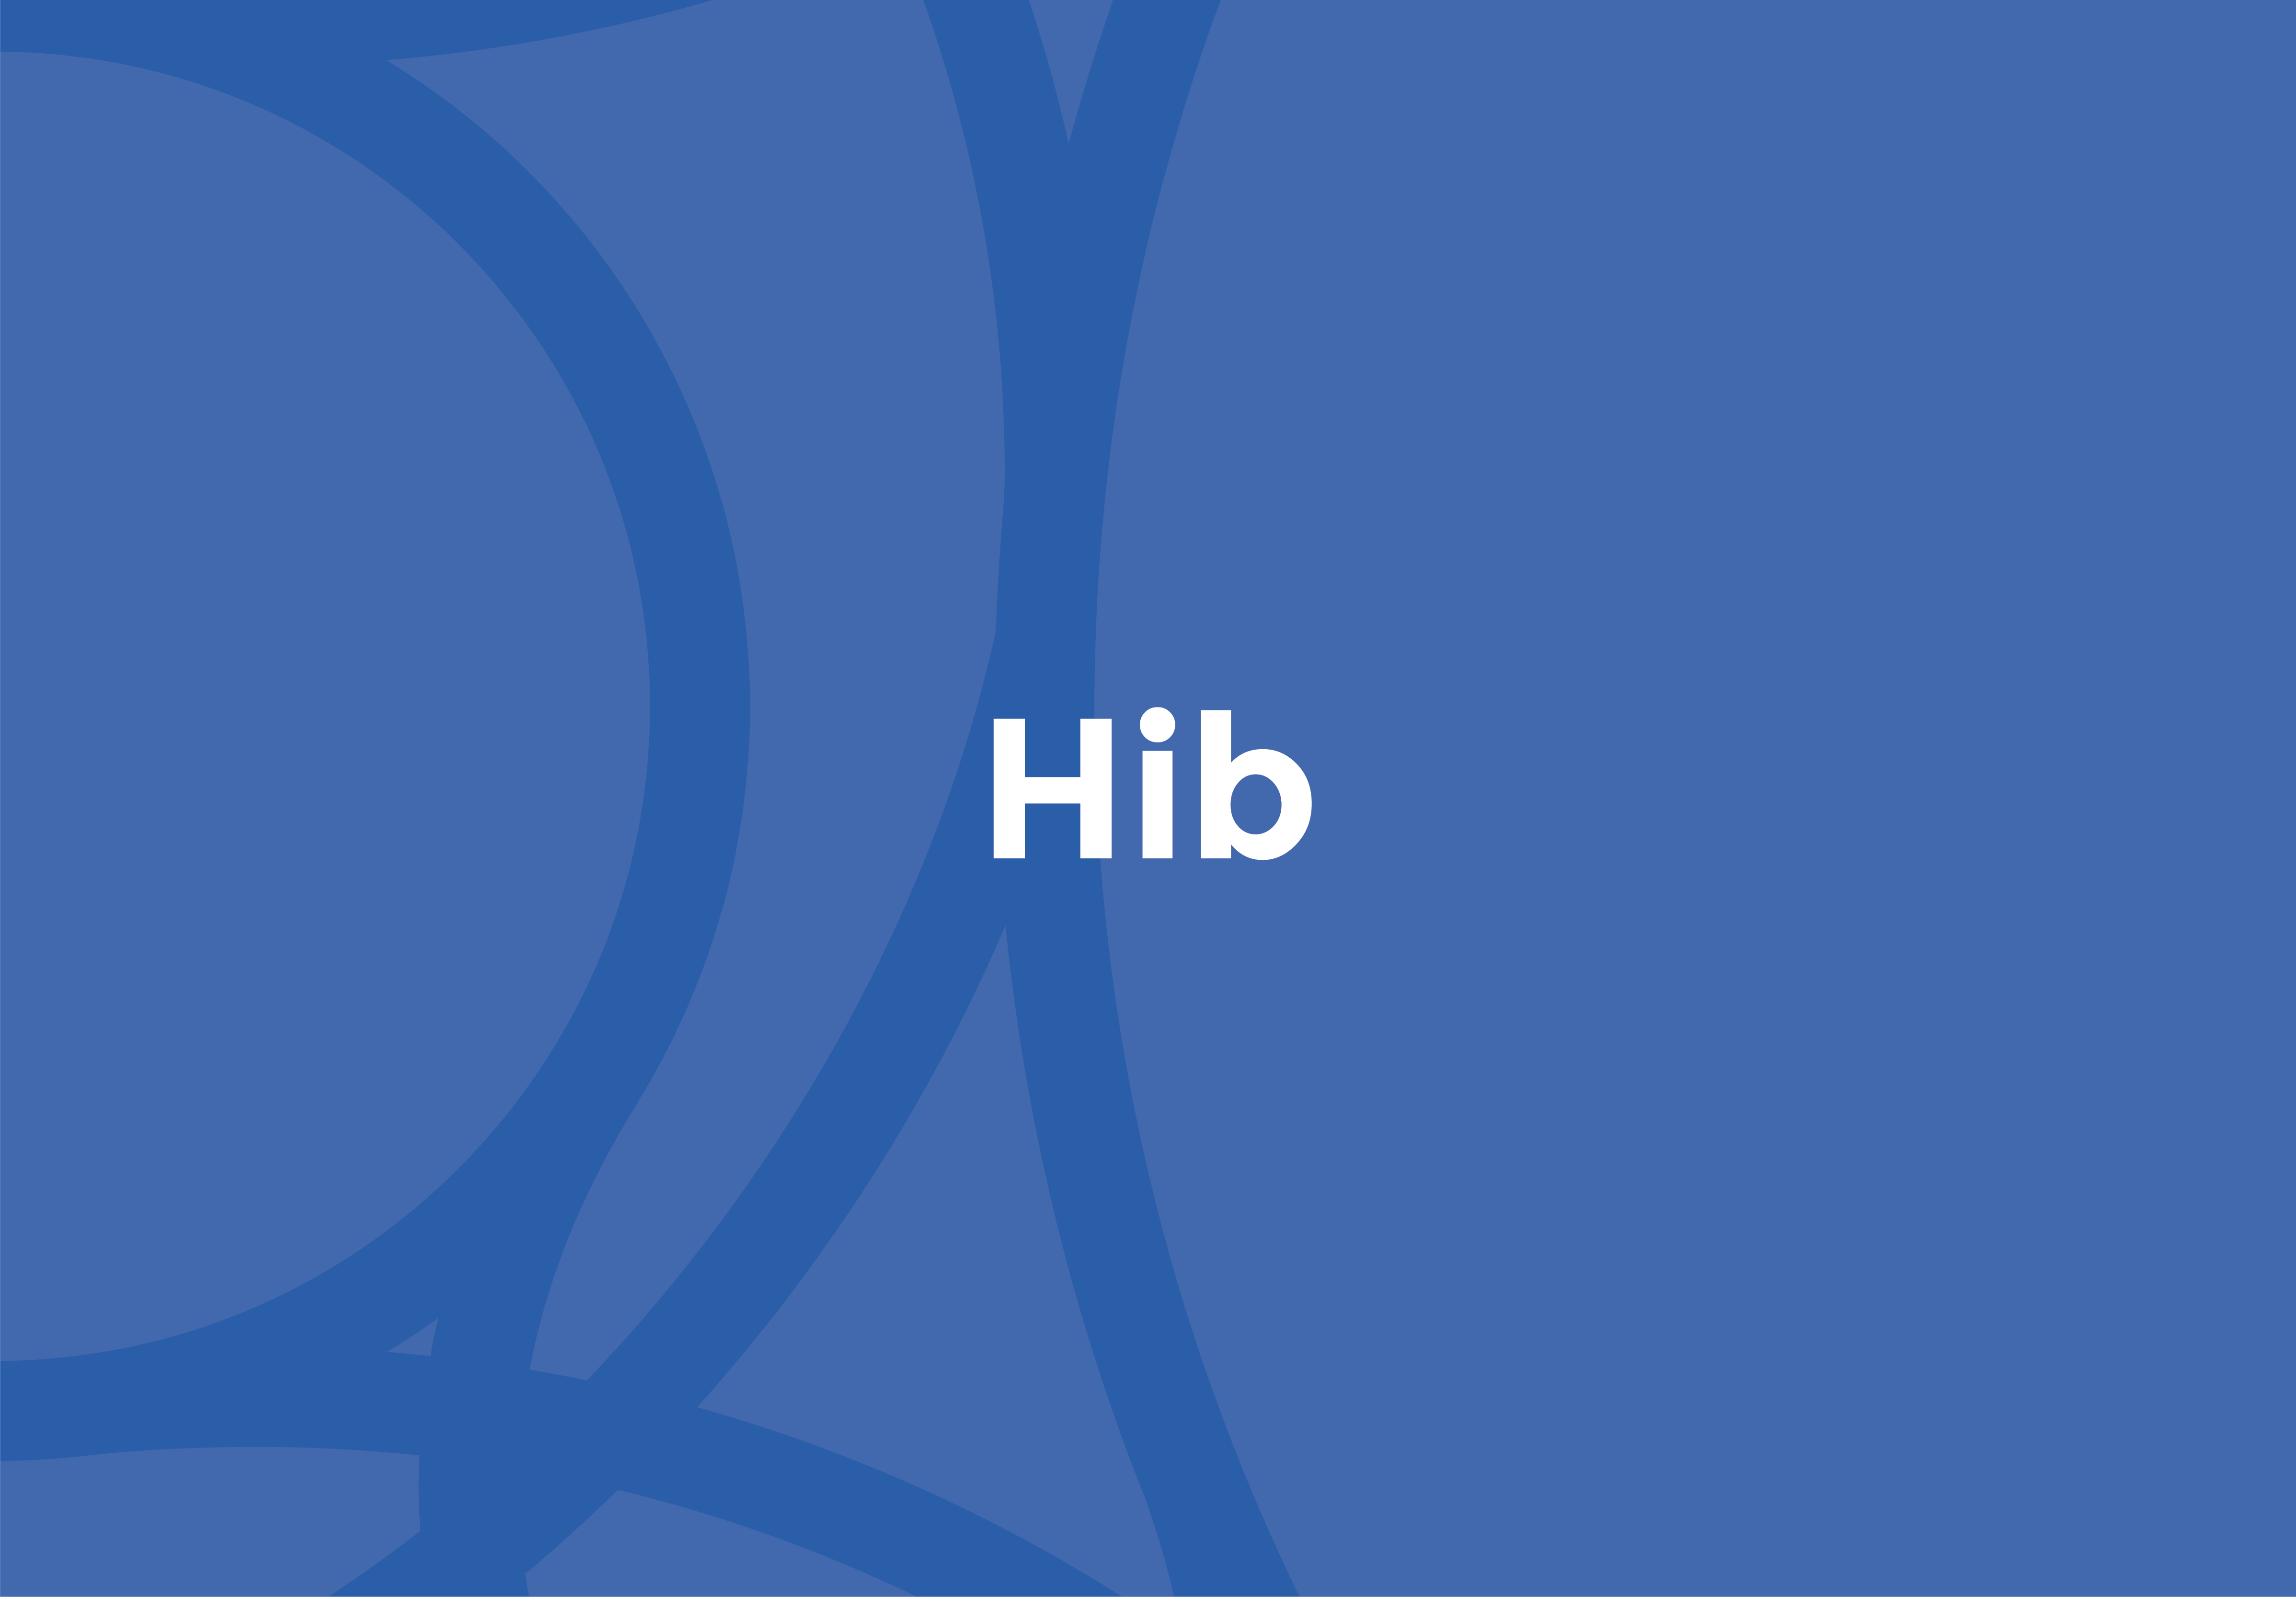 Hib